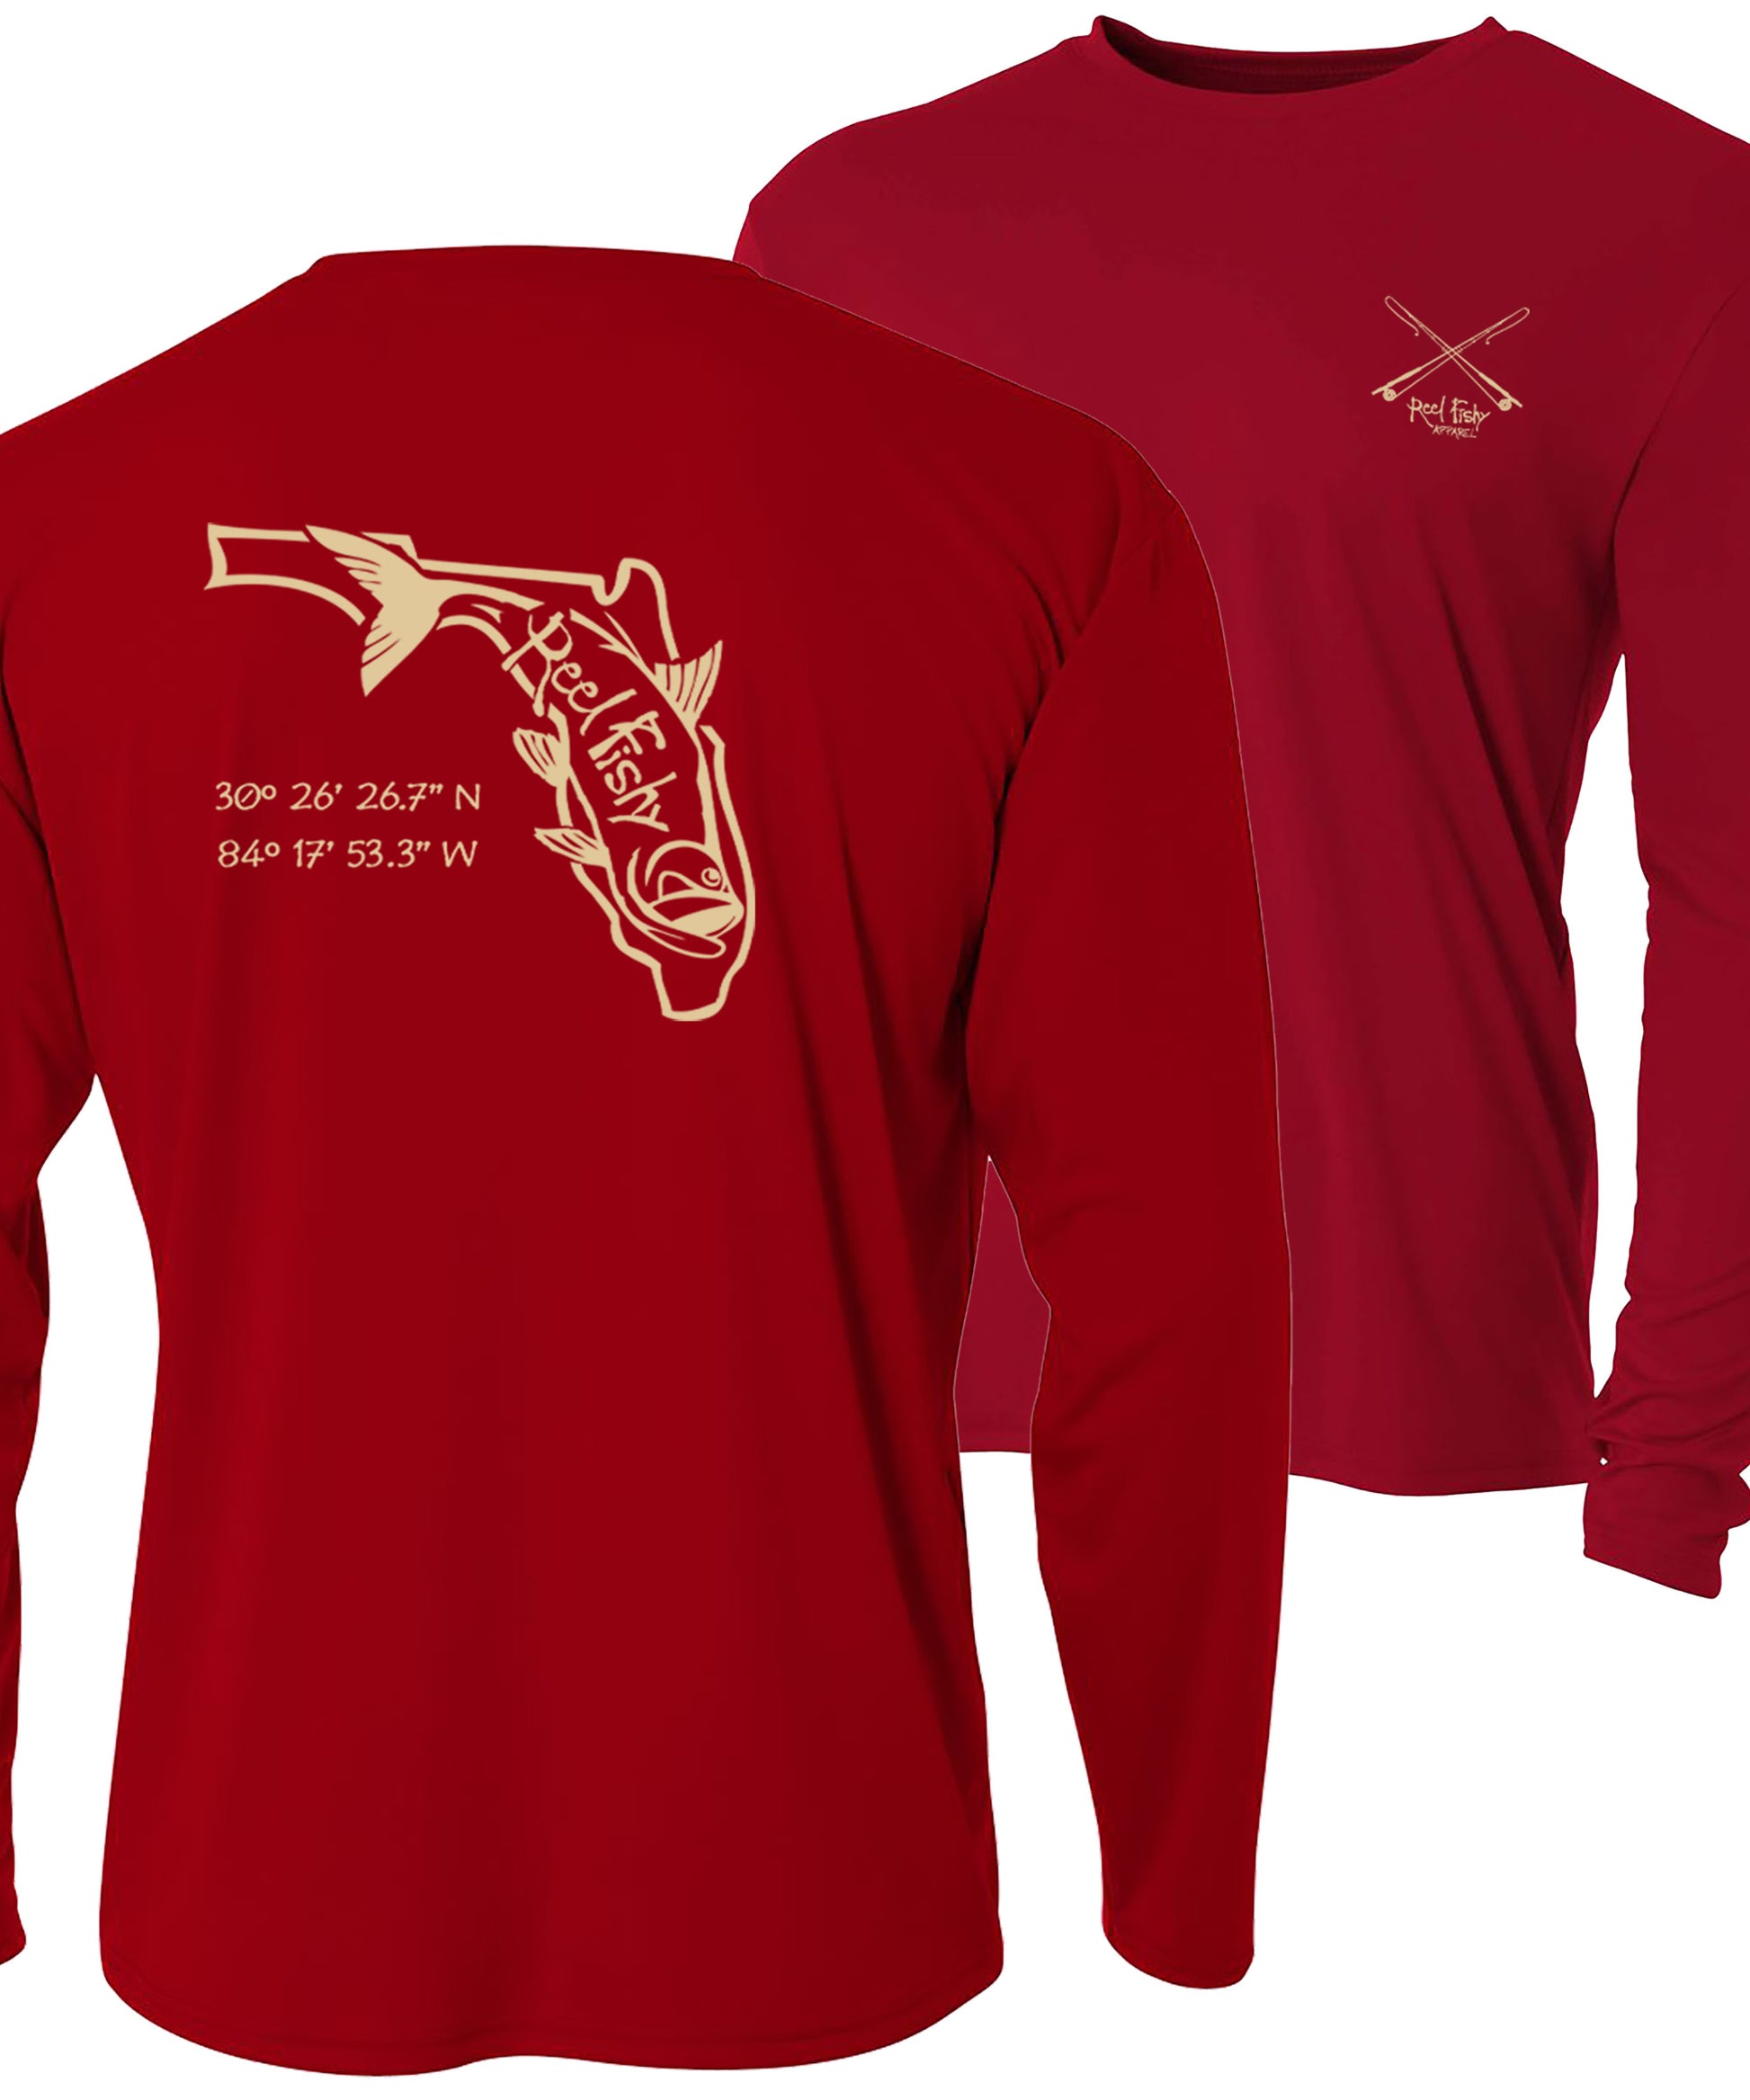 Cardinal/Gold Tarpon State of FL Team Performance Shirts 50+UV Sun Protection Long Sleeves